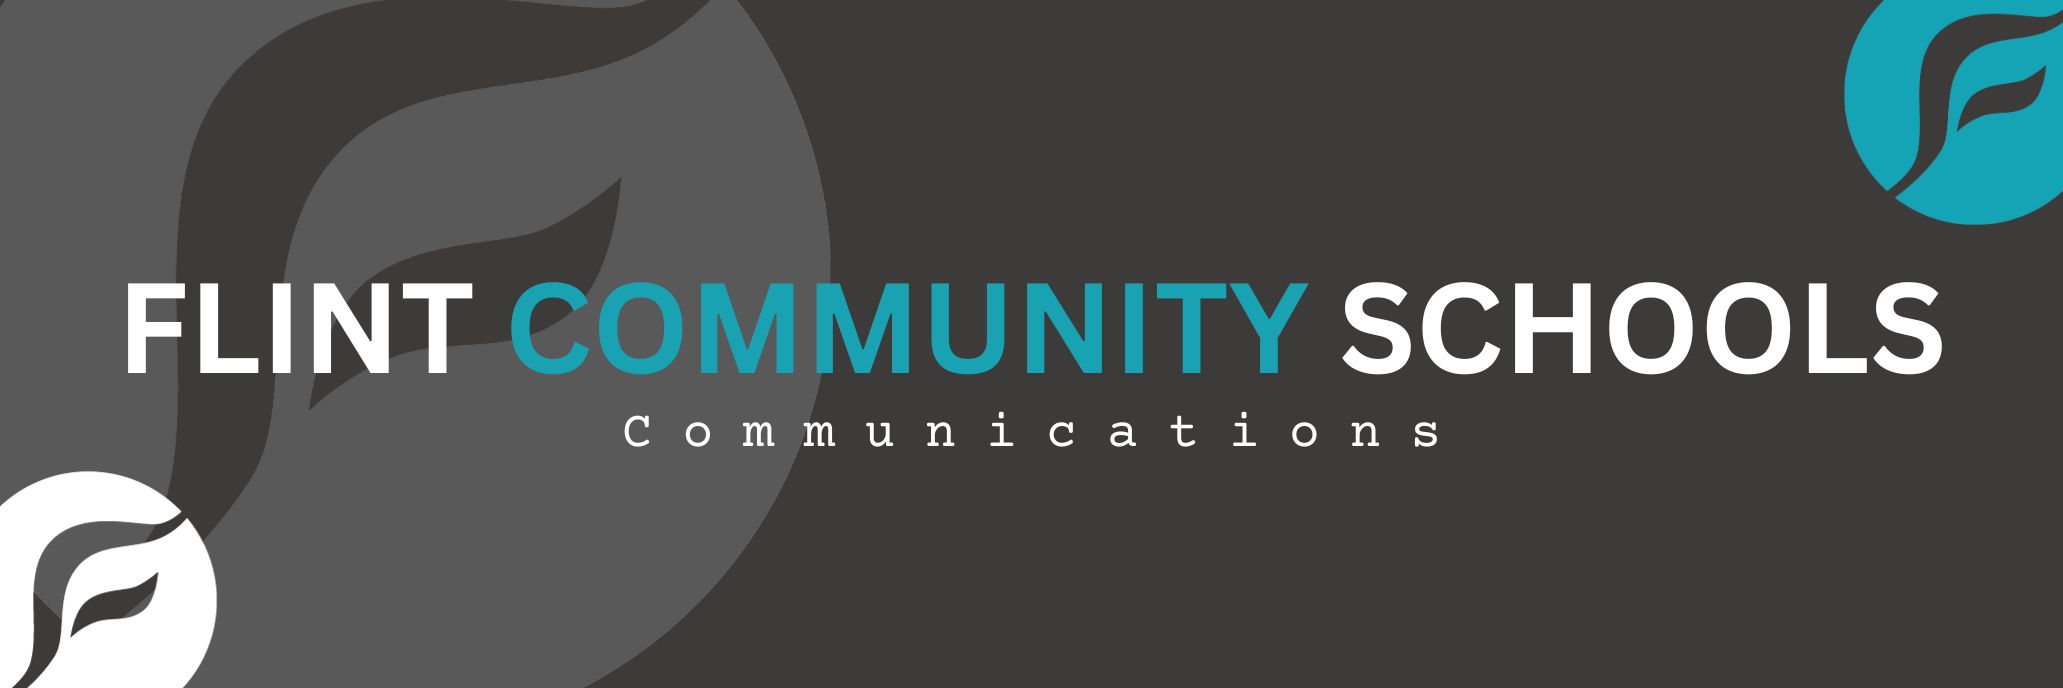 Flint Community Schools Communications Banner